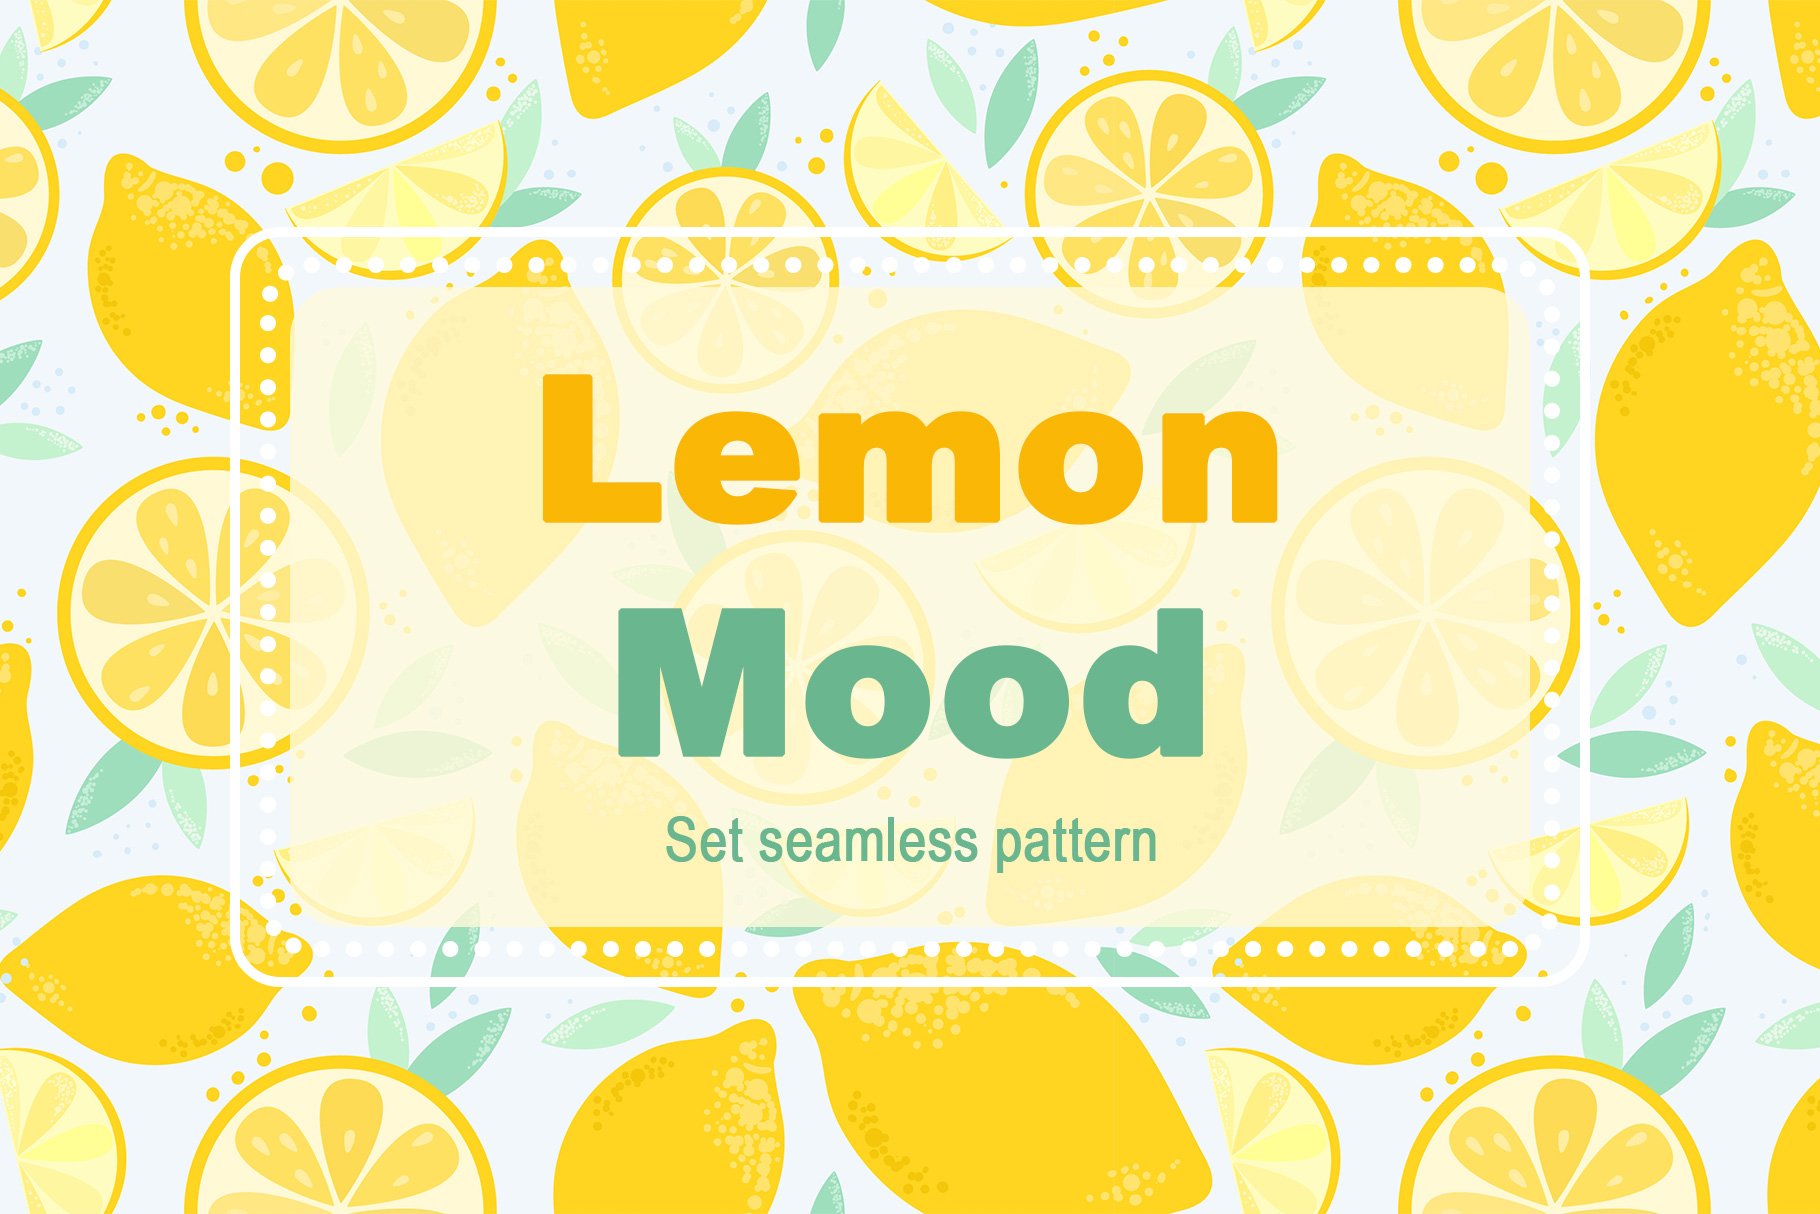 Lemon Mood seamless patterns cover image.